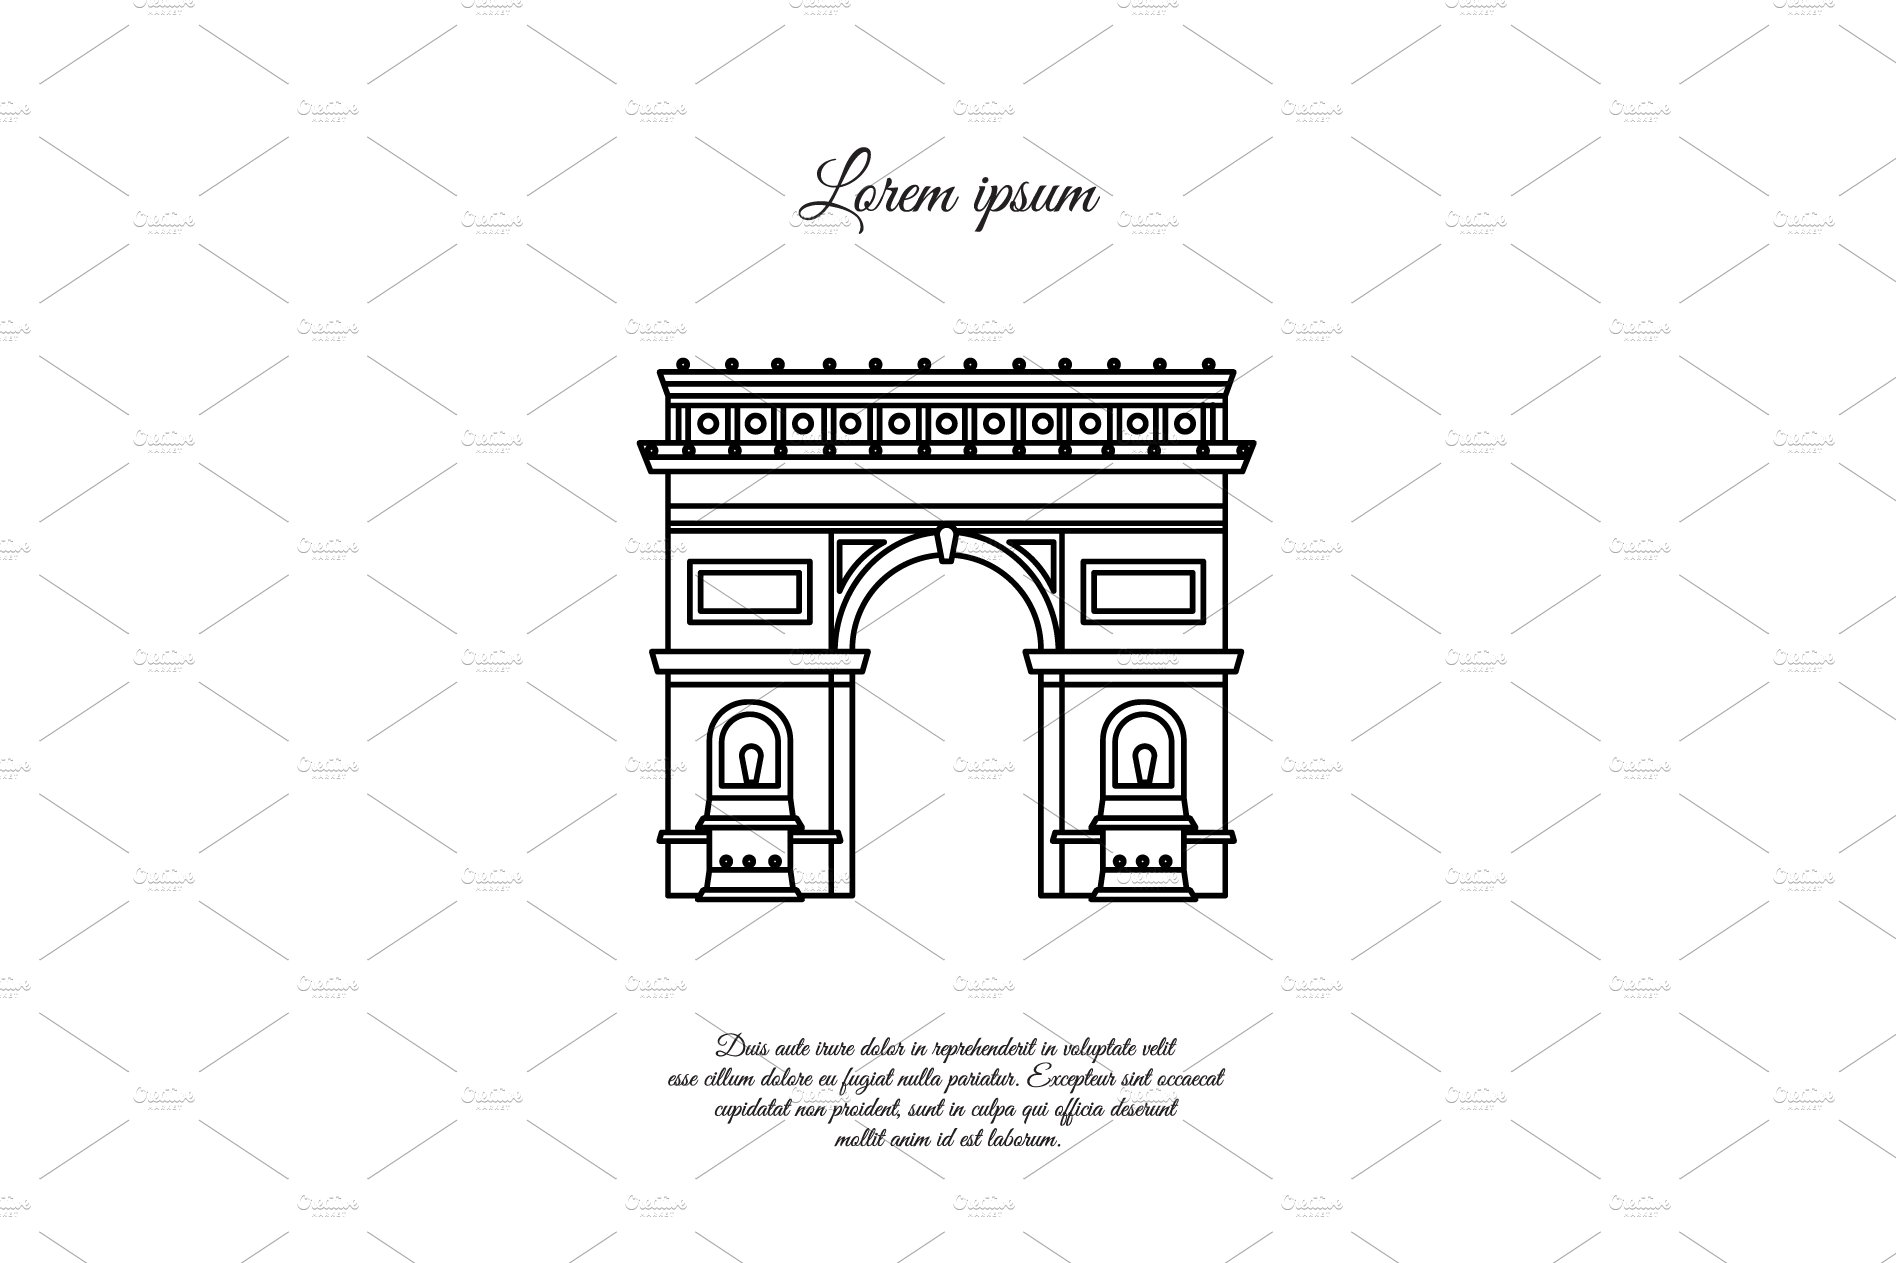 Arc de Triomphe in Paris vector line cover image.